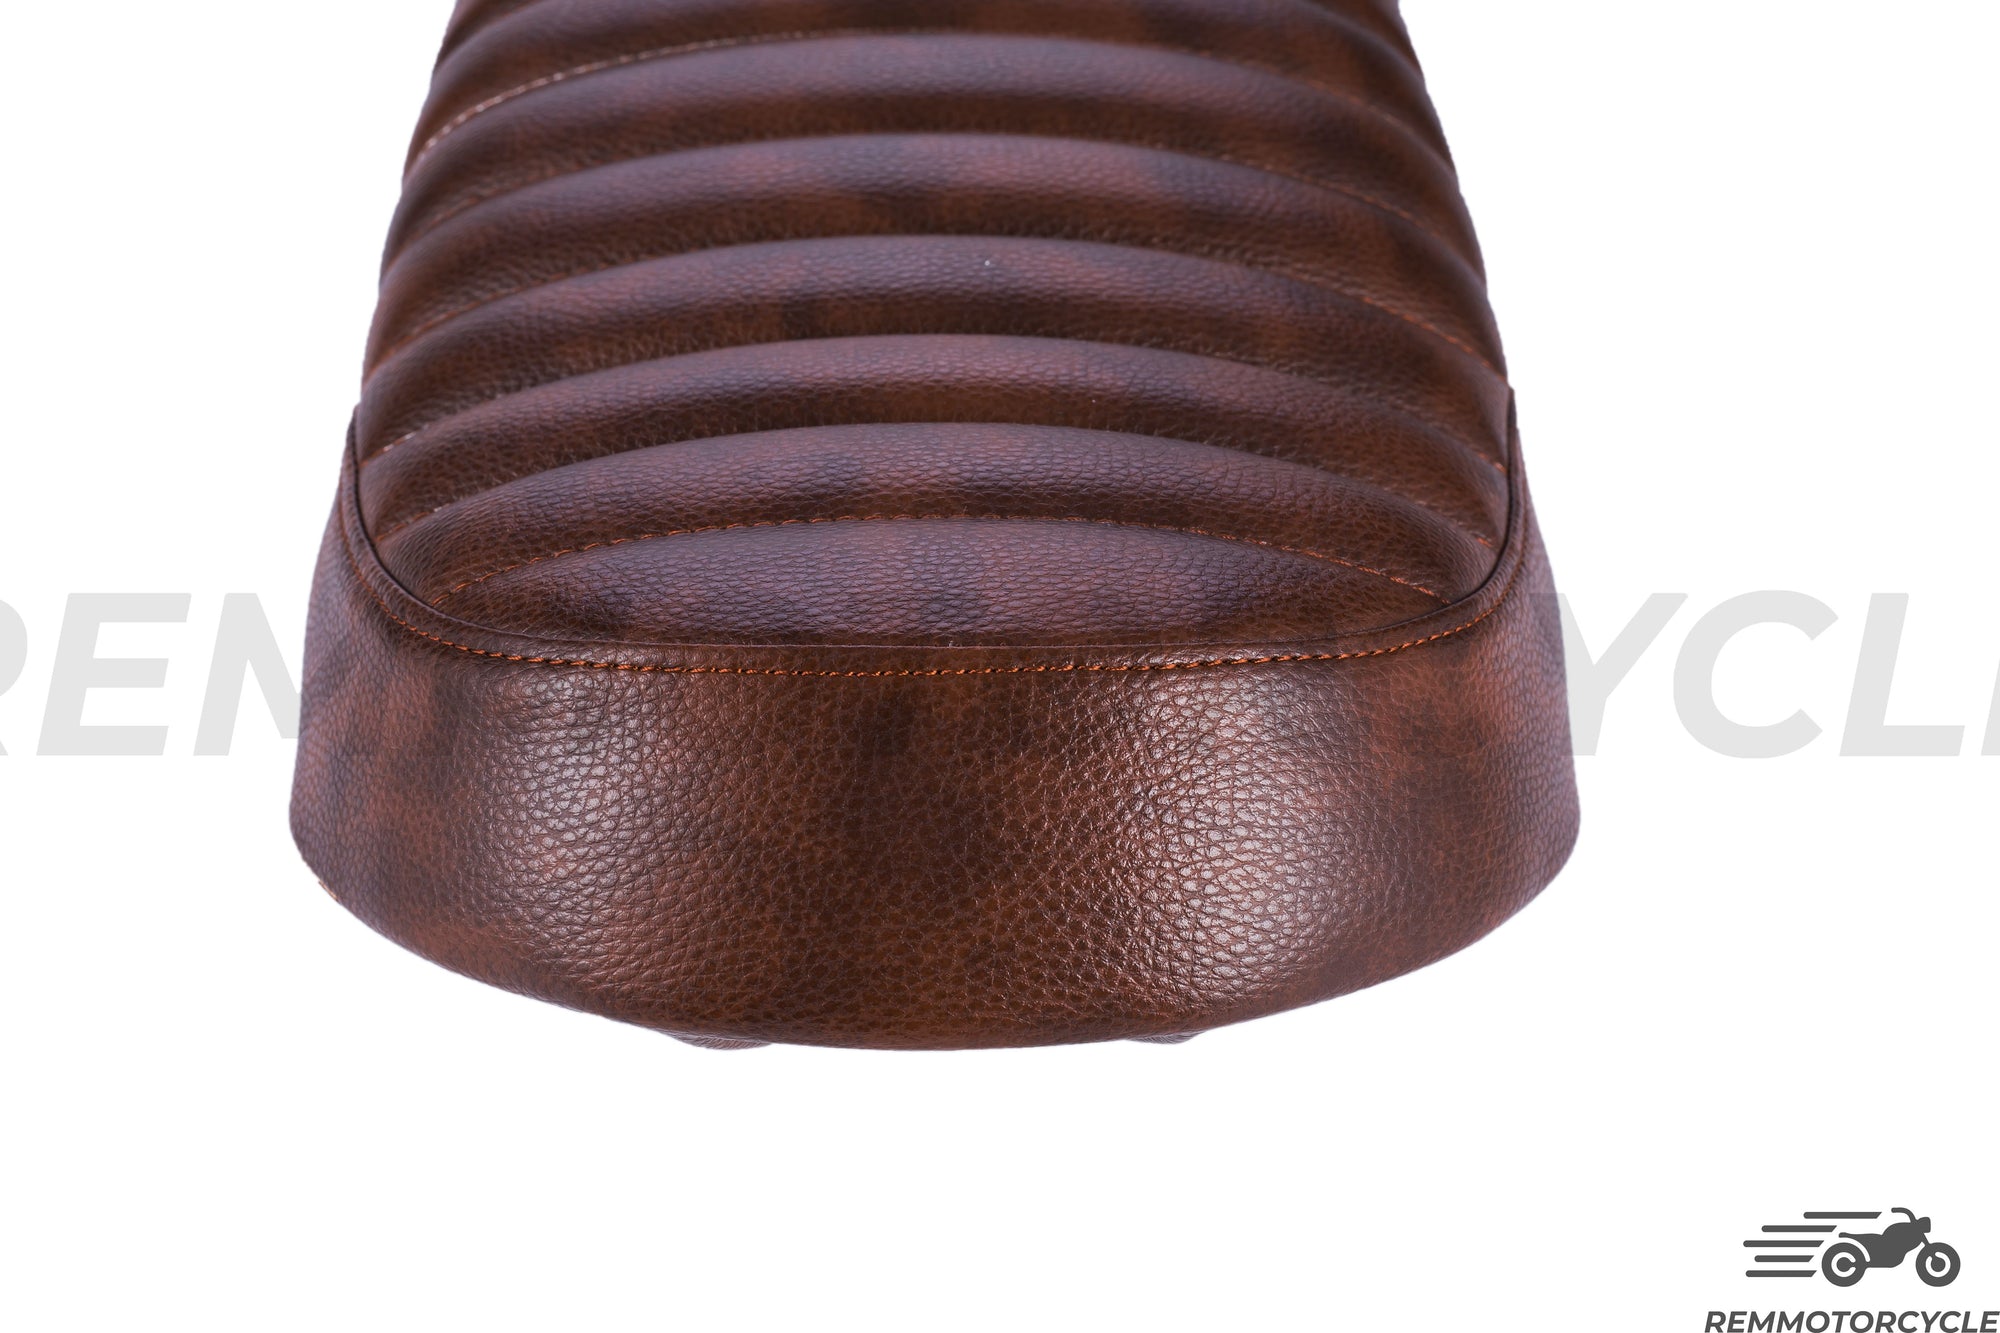 Rediceret brun sadel type 2 metal bund 50 eller 60 cm